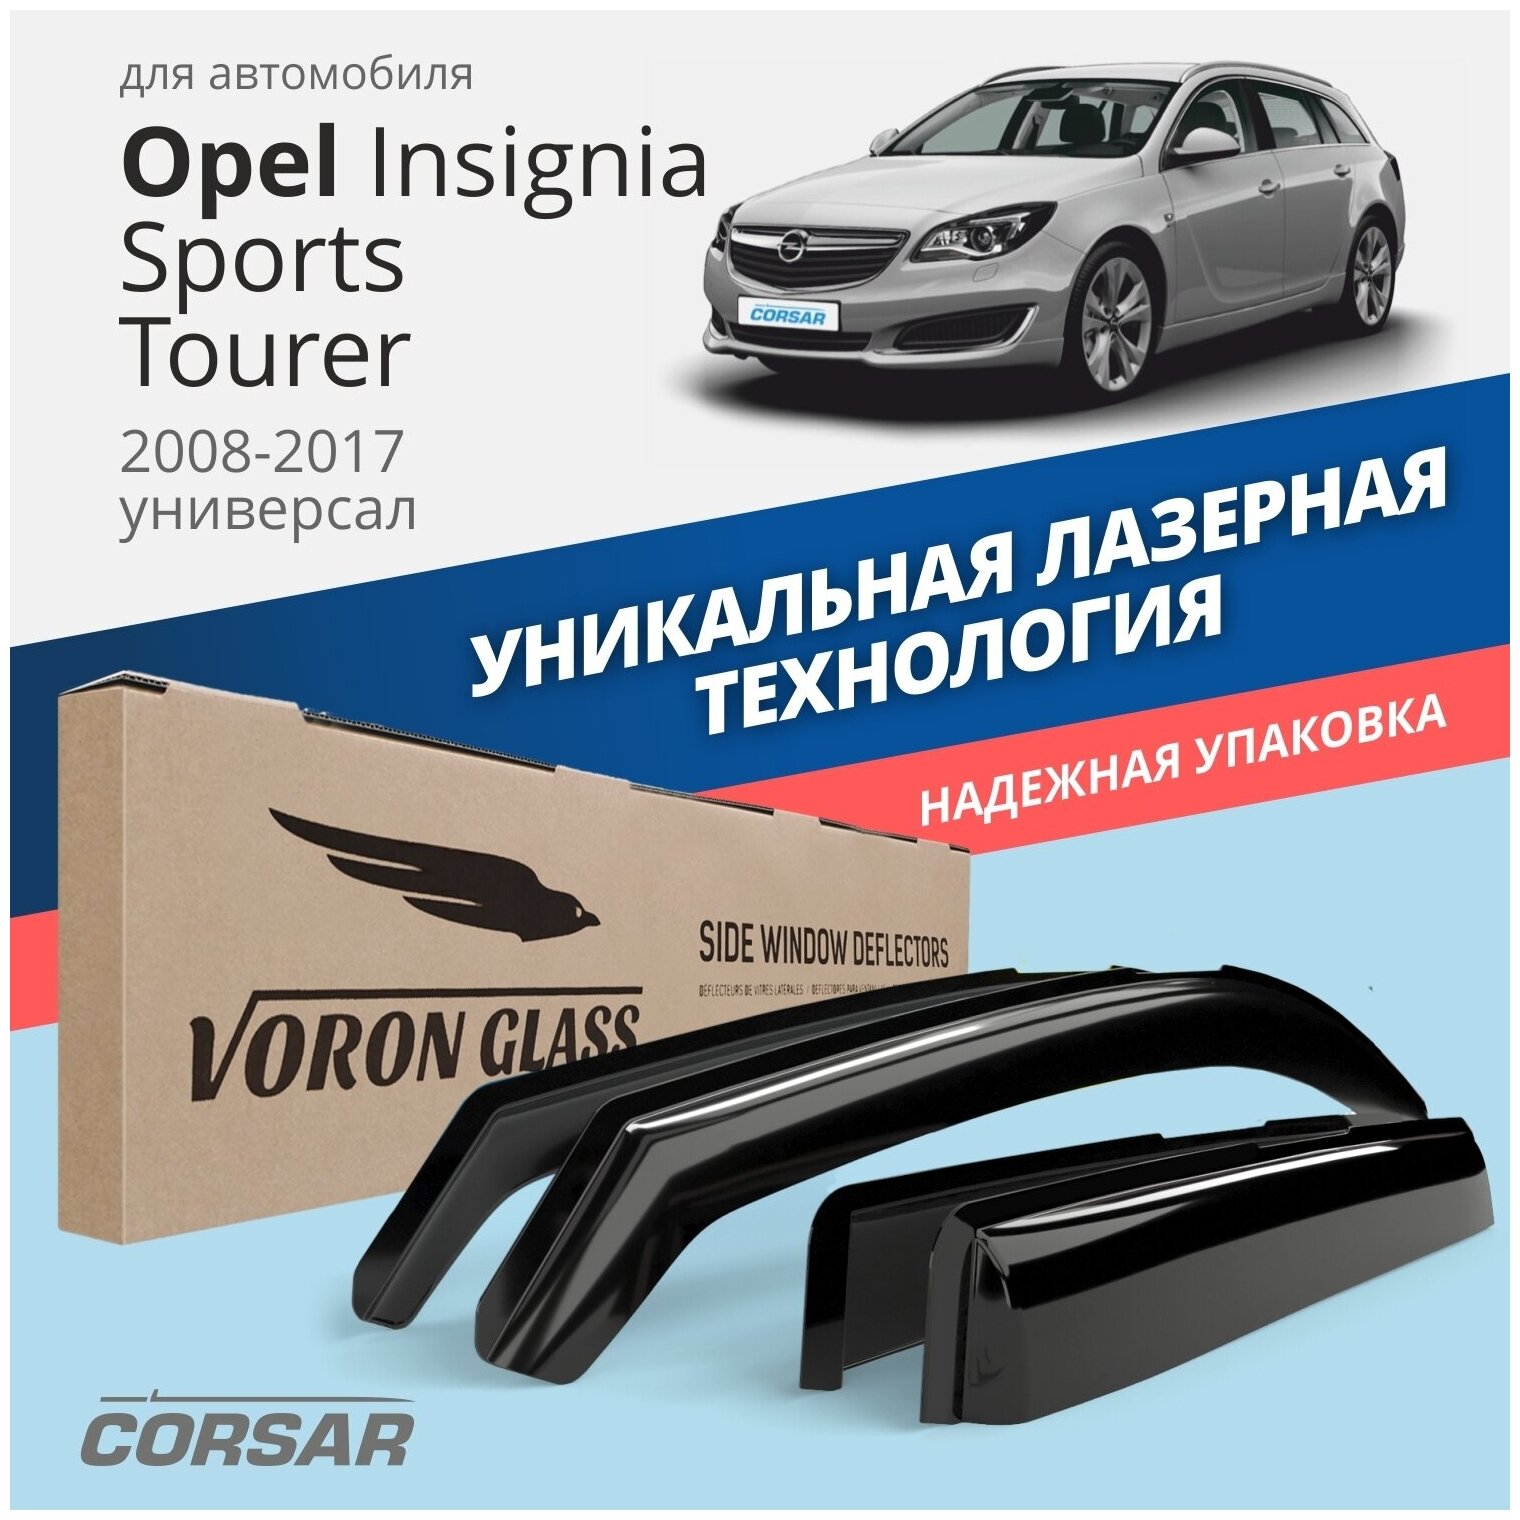 Дефлекторы на окна Voron Glass CORSAR Opel Insignia Sports Tourer 2008-н.в., комплект 4шт, - фото №11